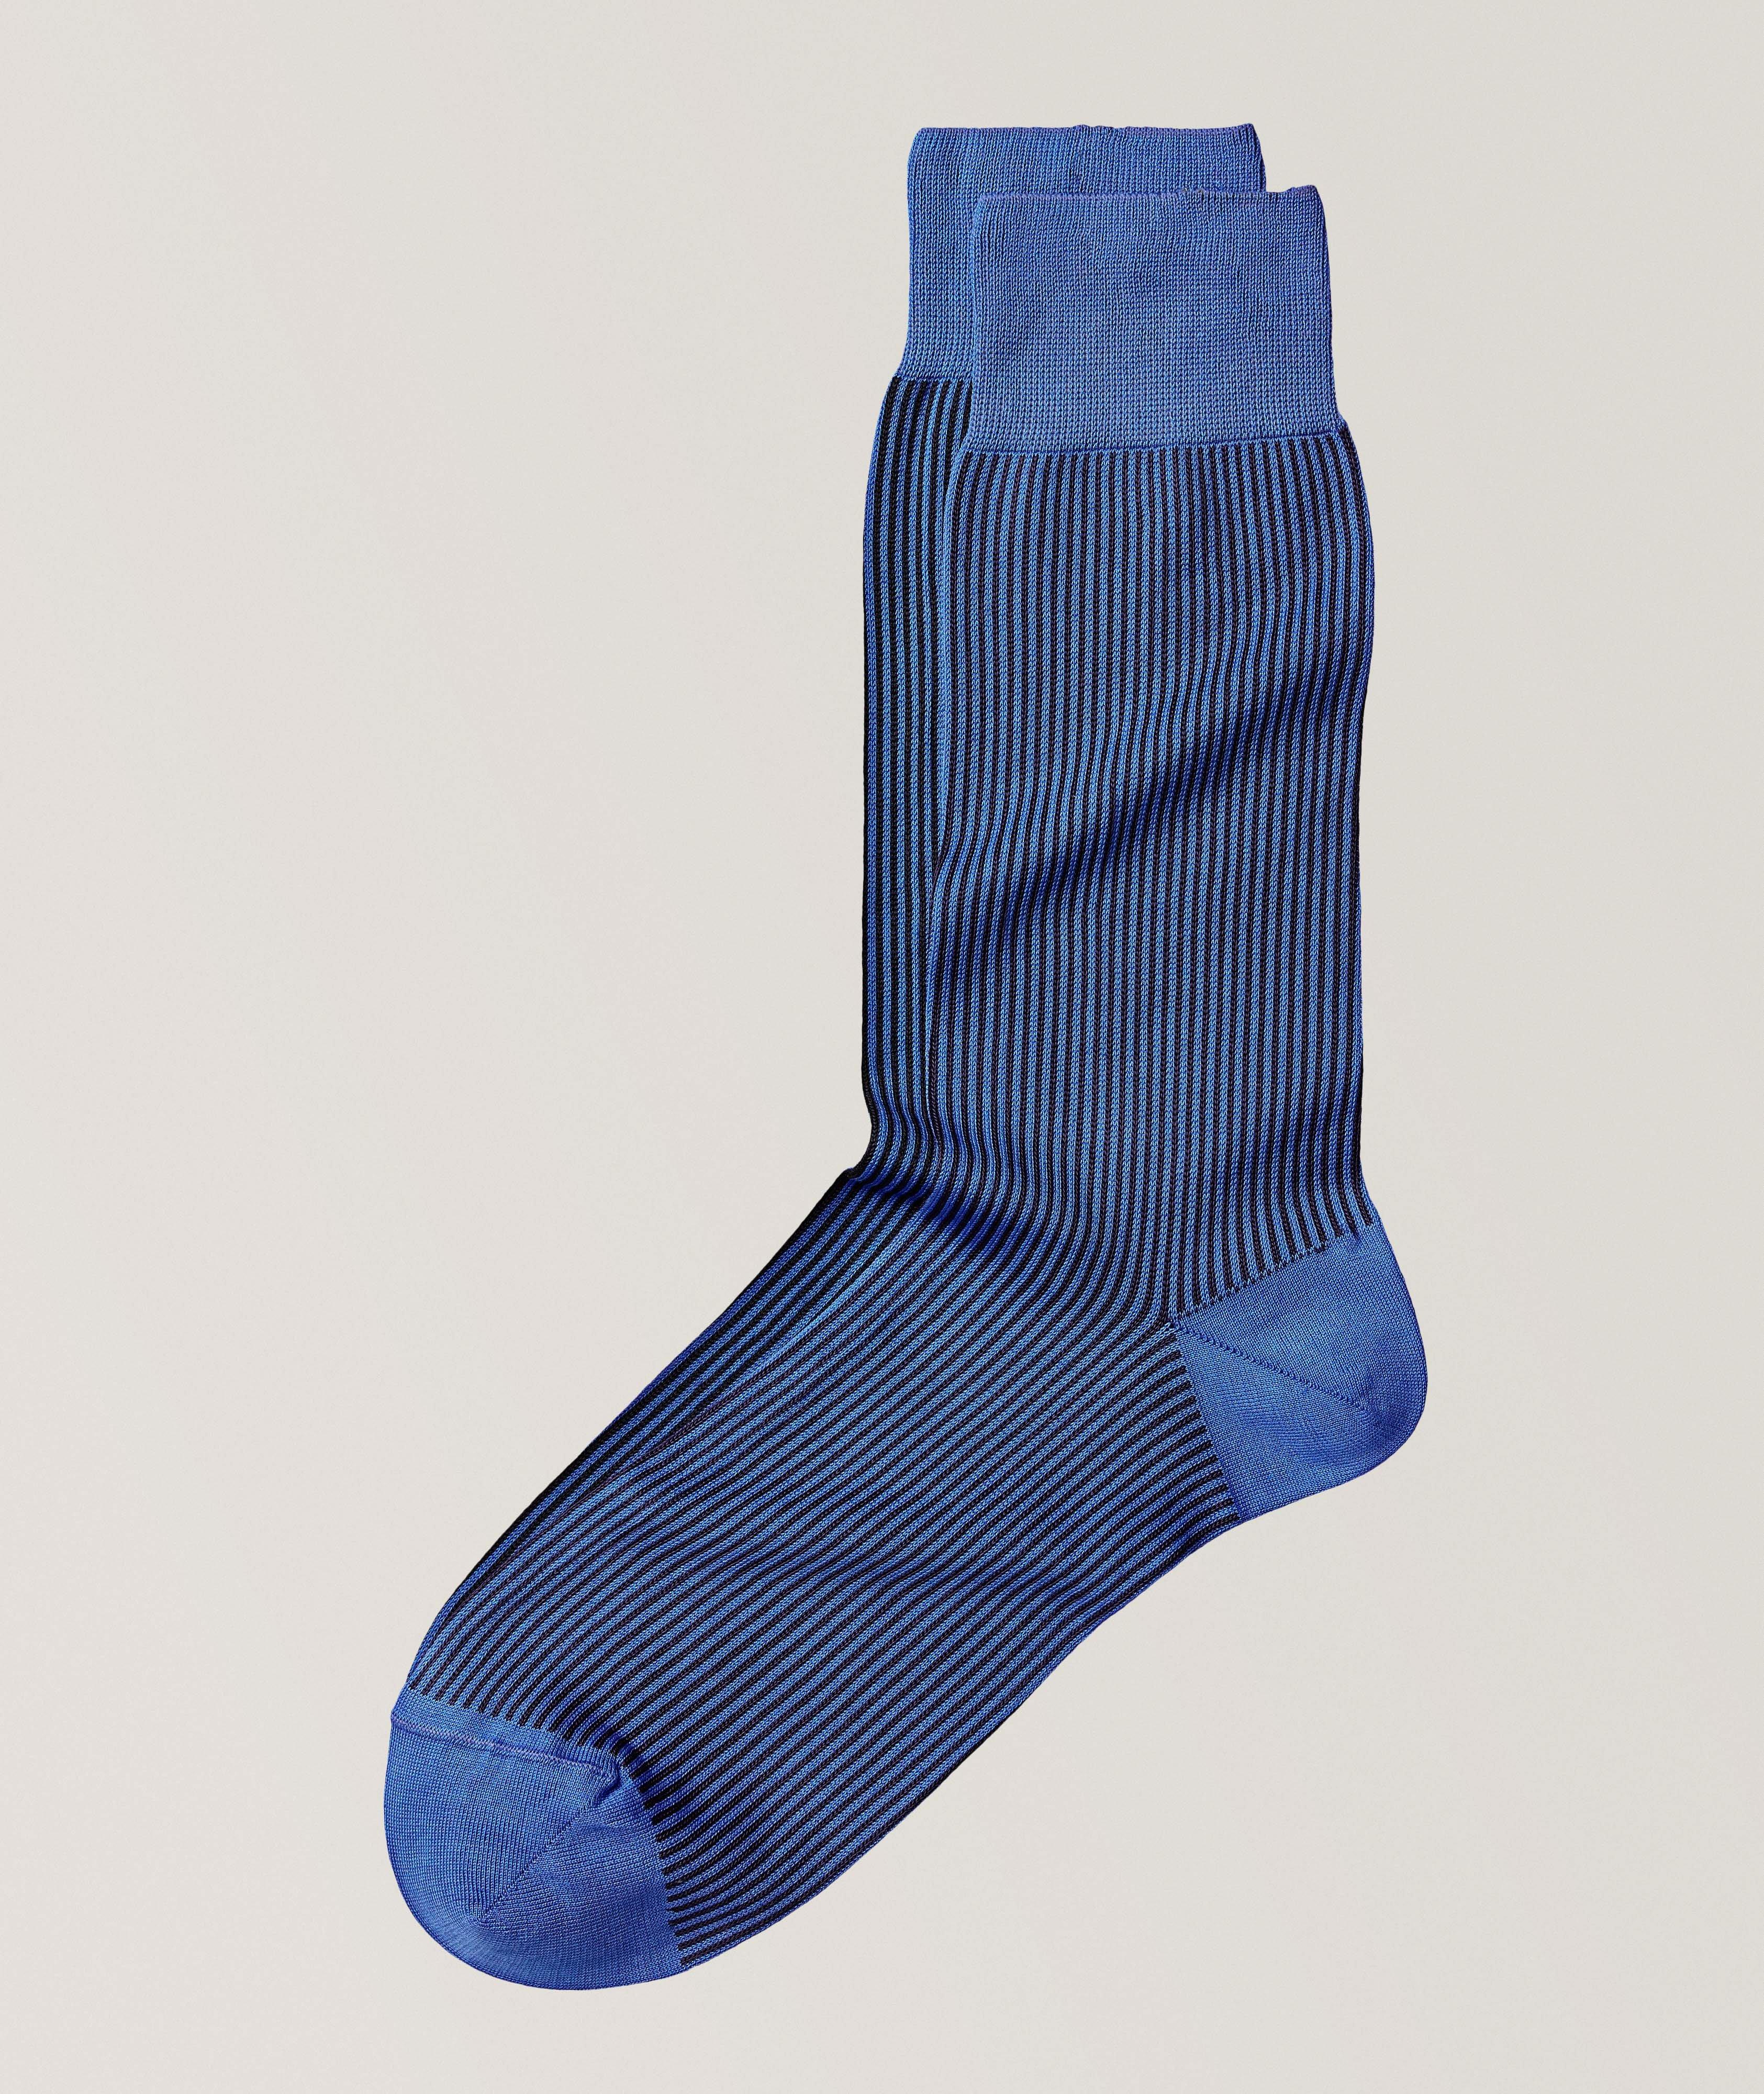 Pinstripe Max Cotton-Blend Dress Socks  image 0